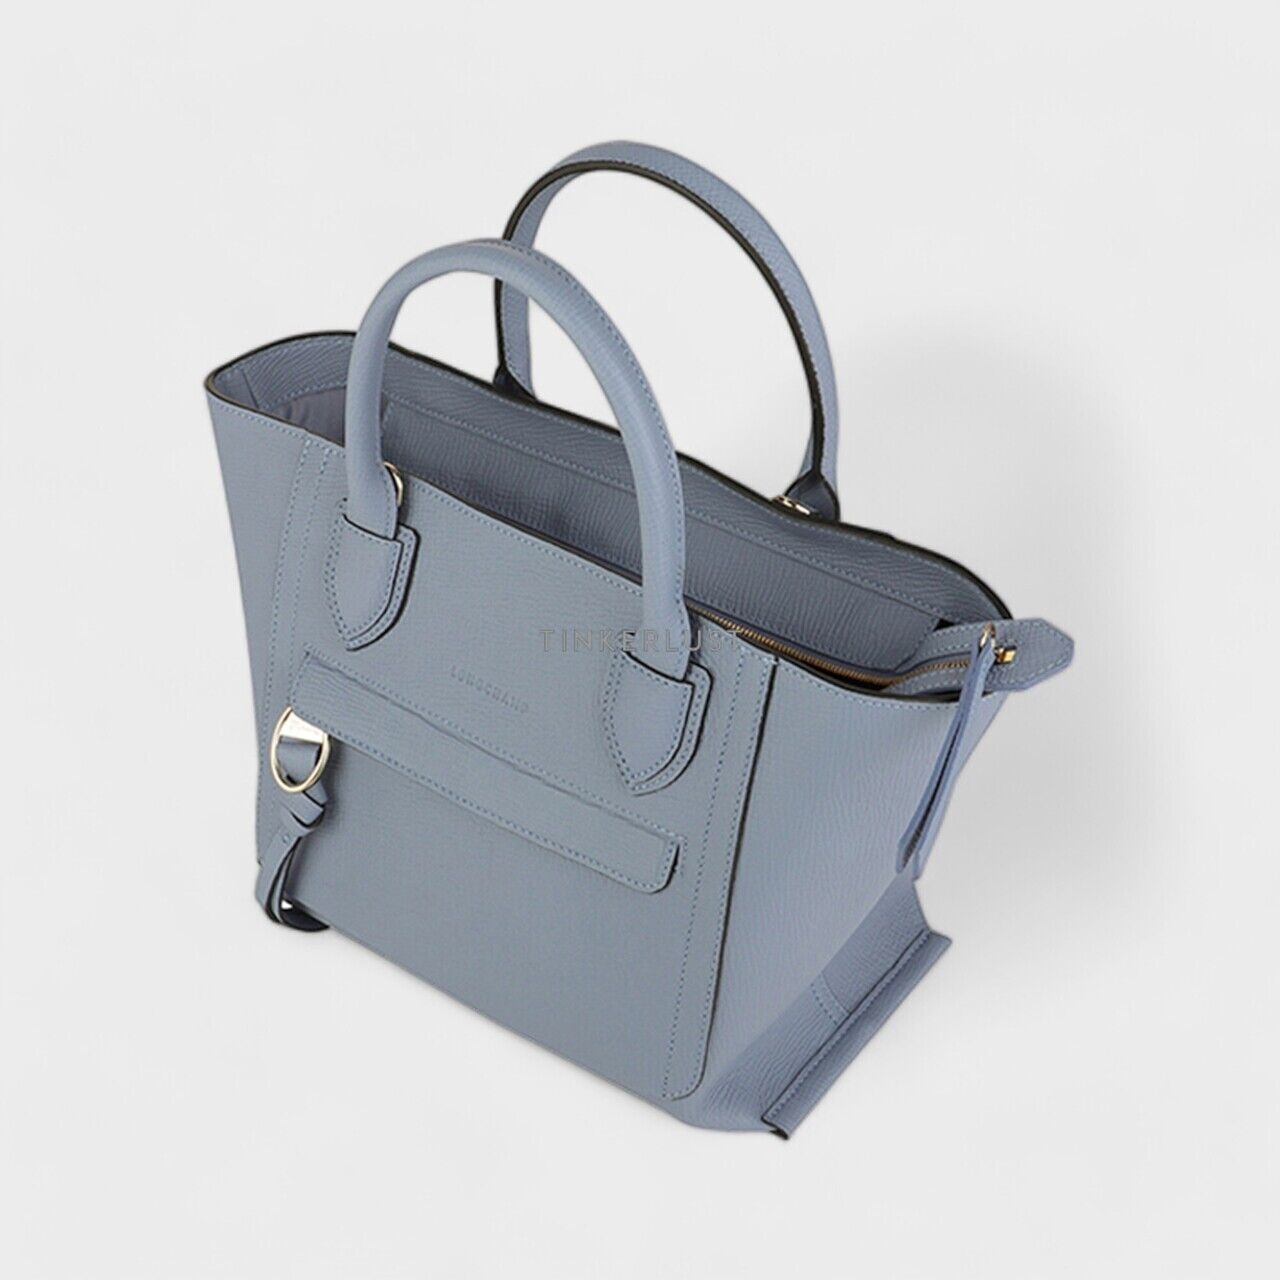 Longchamp Medium Mailbox Top Handle Bag in Slate Satchel